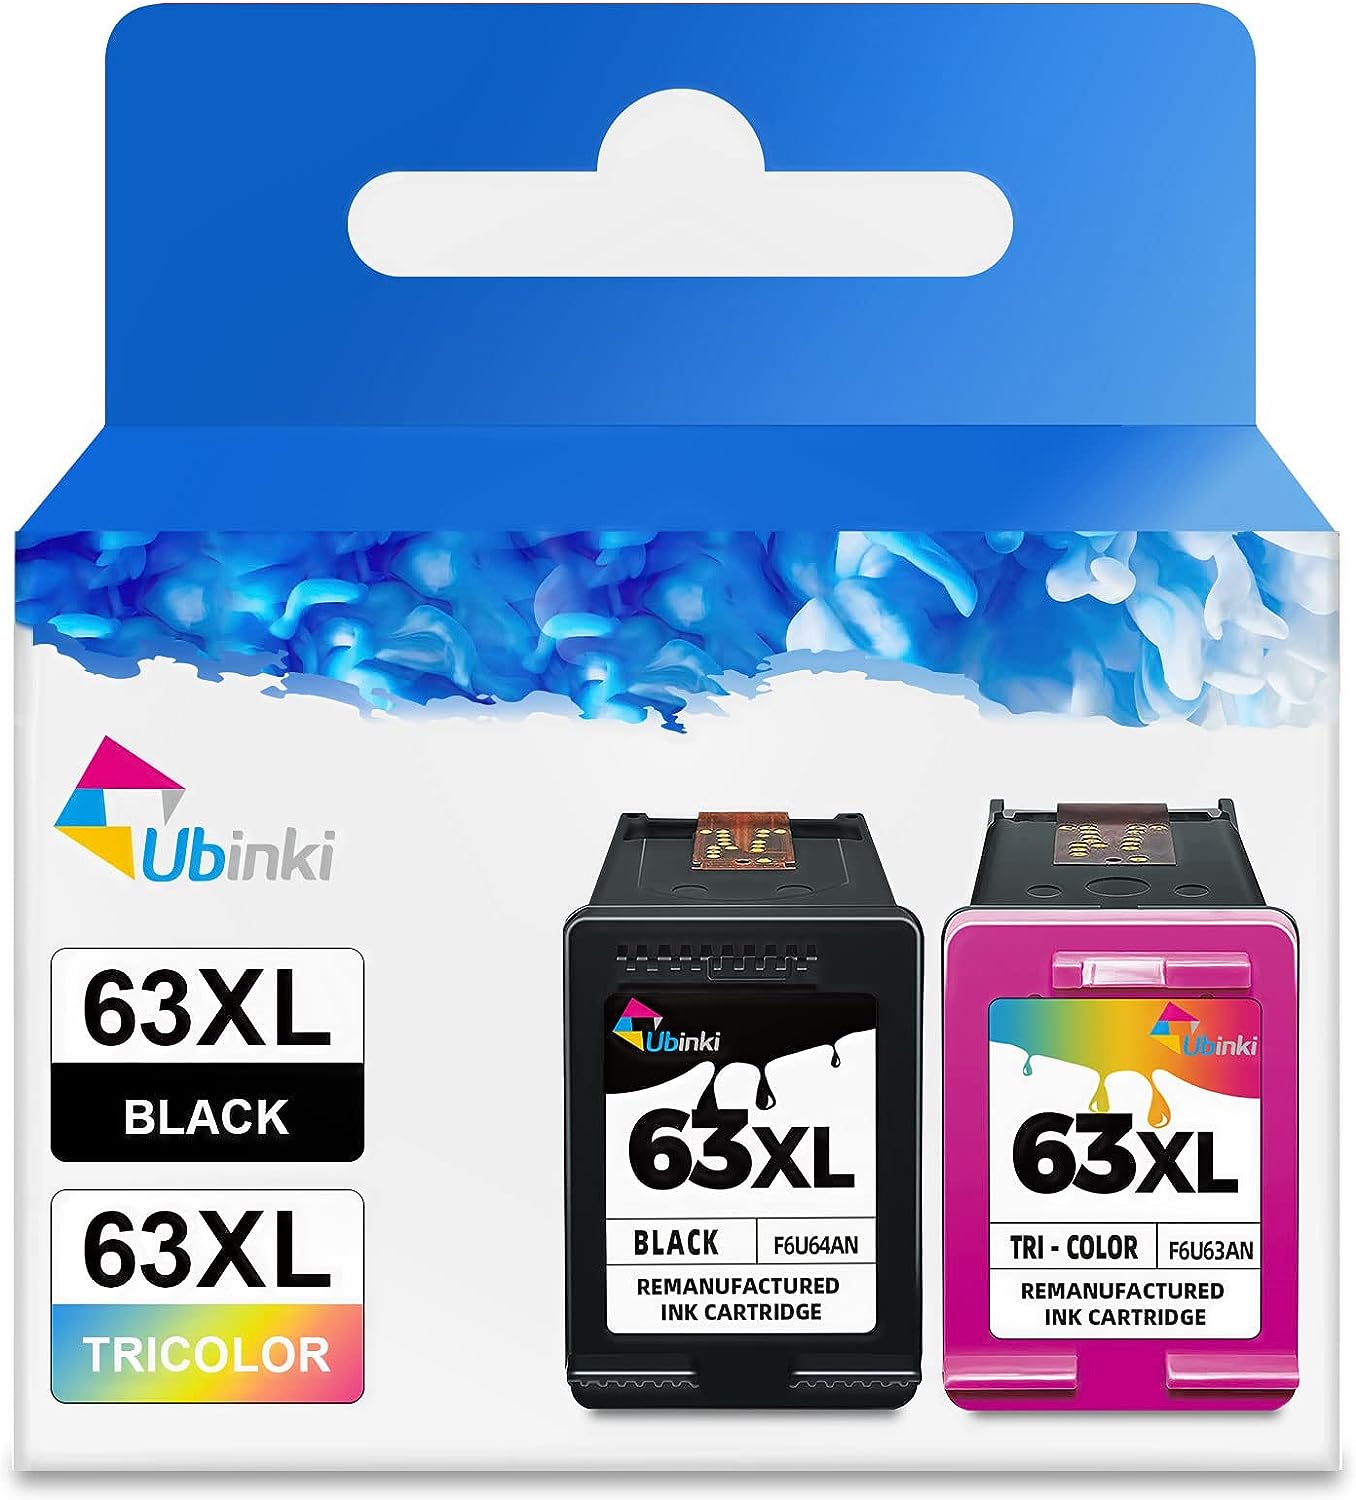 Ubinki 63XL Ink Cartridge Black Color Combo Pack [...]